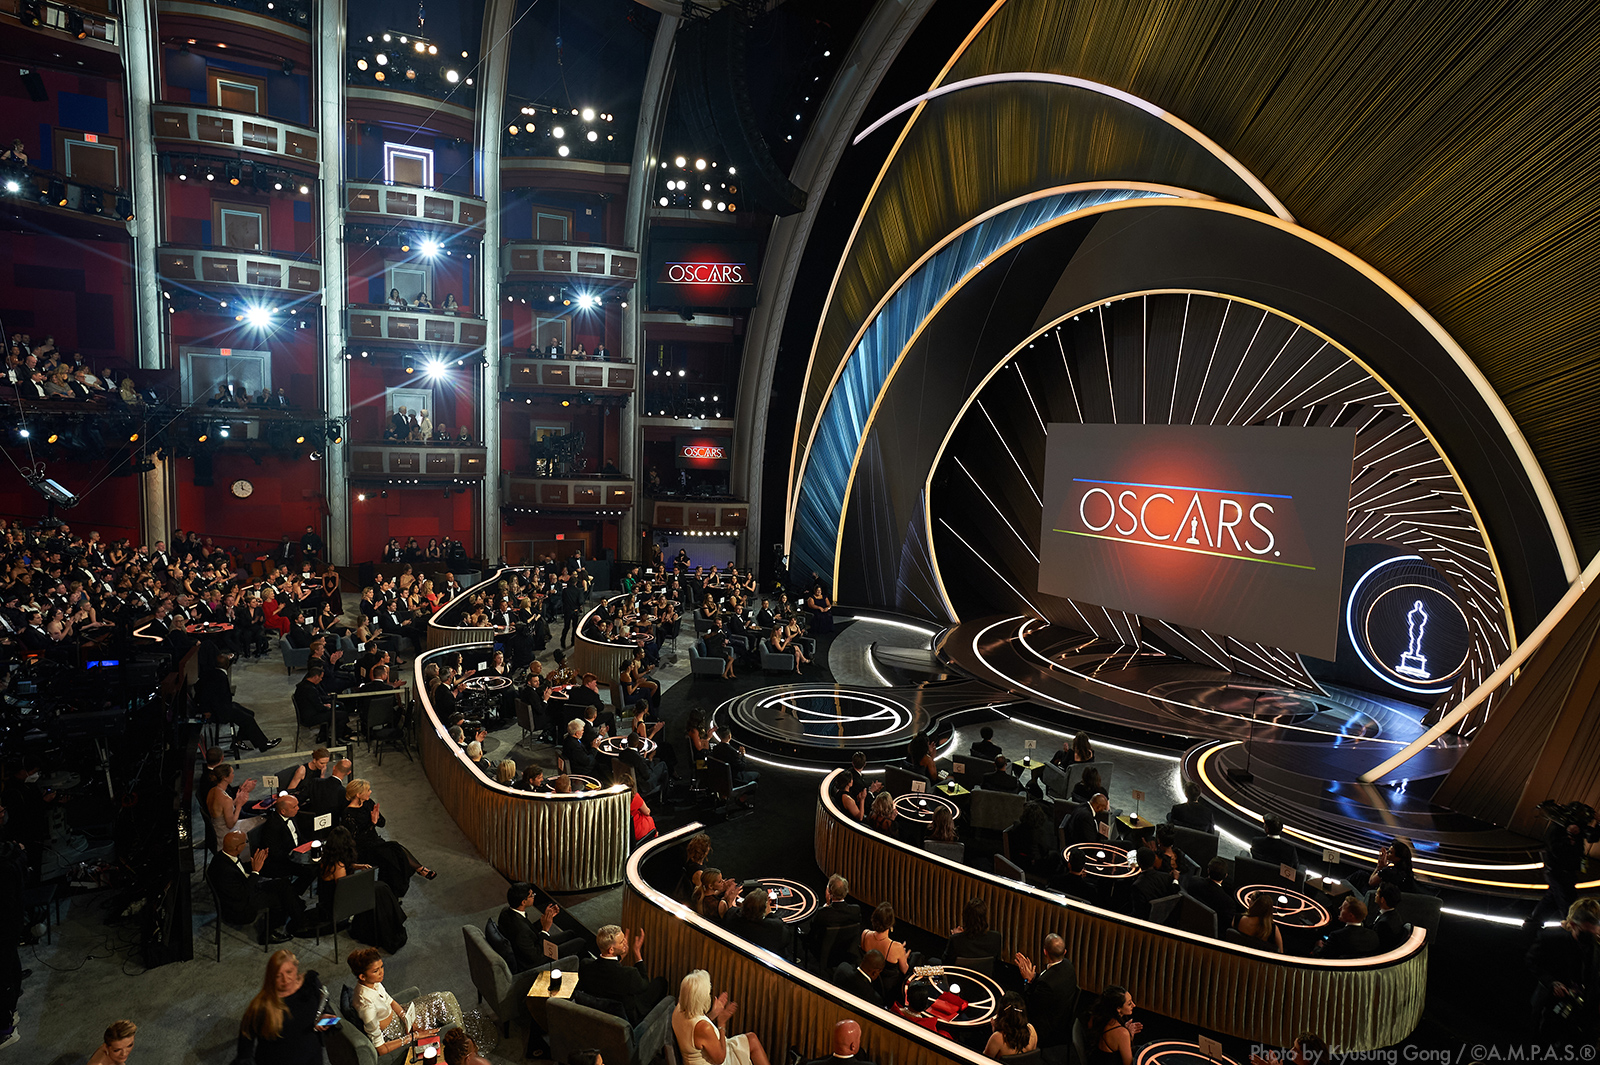 Oscars 2021: Academy Awards Complete Winners List - TV Guide